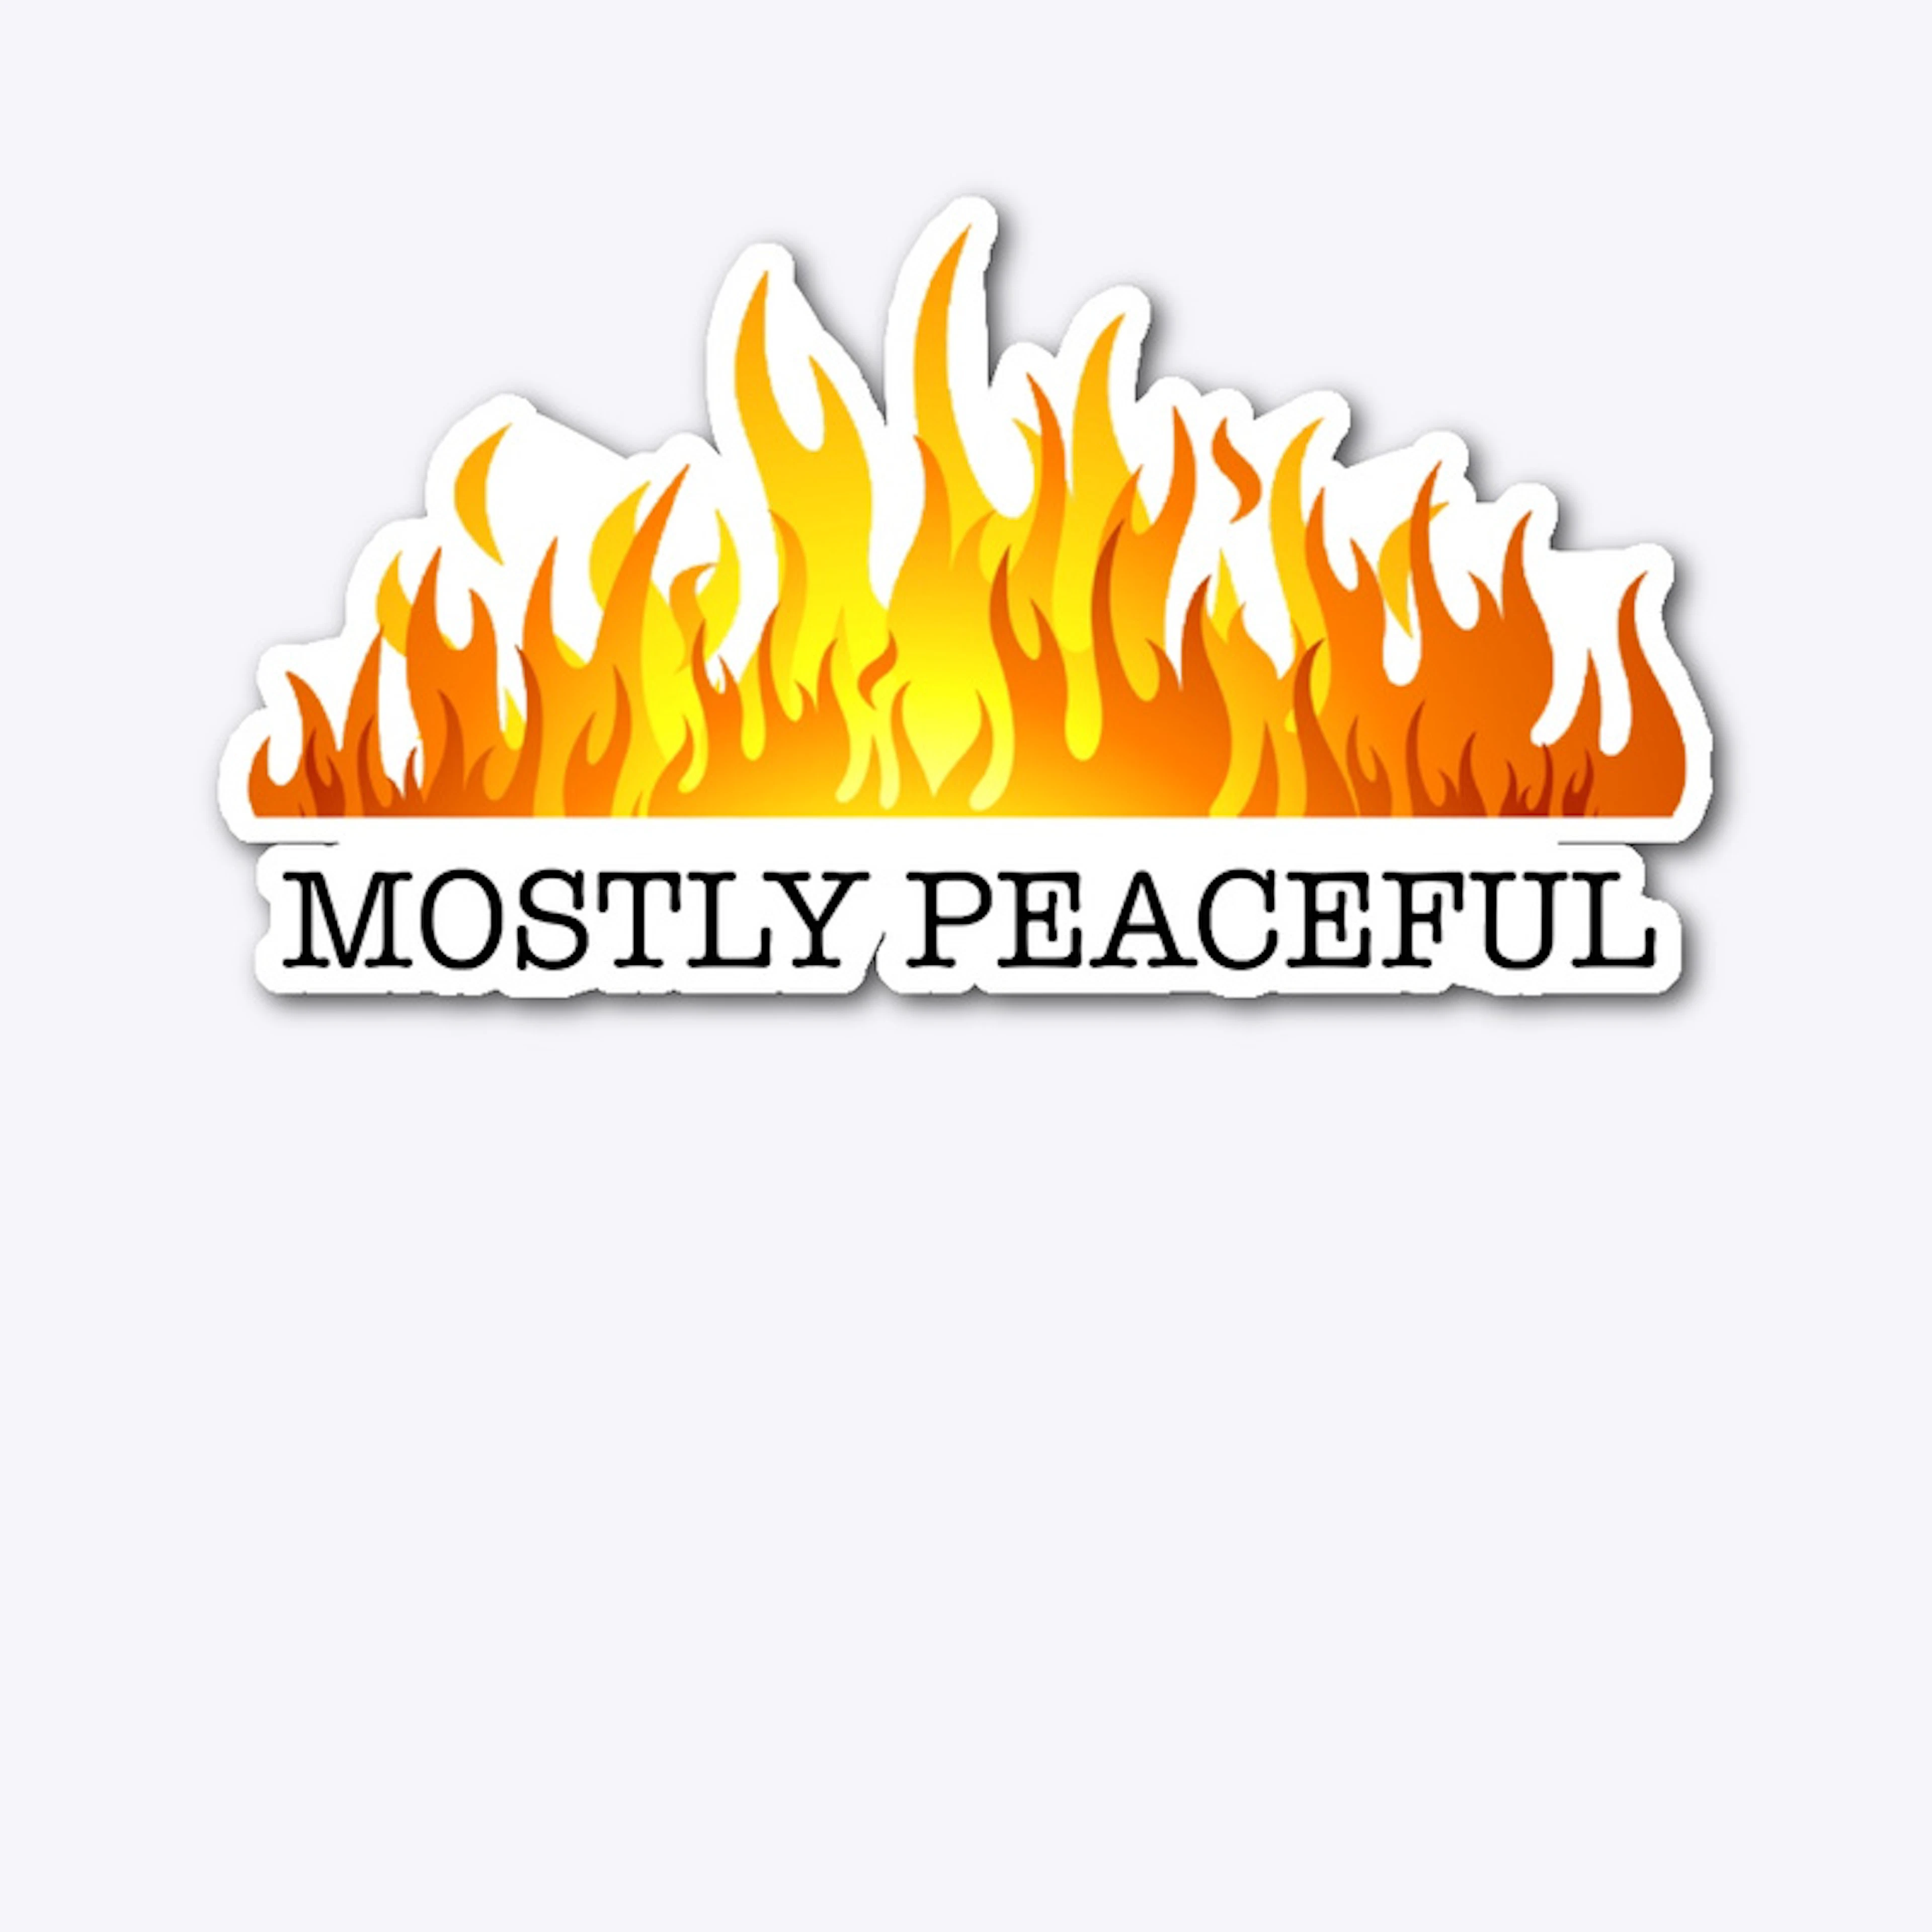 CNN “Fiery but Mostly Peaceful” Headline